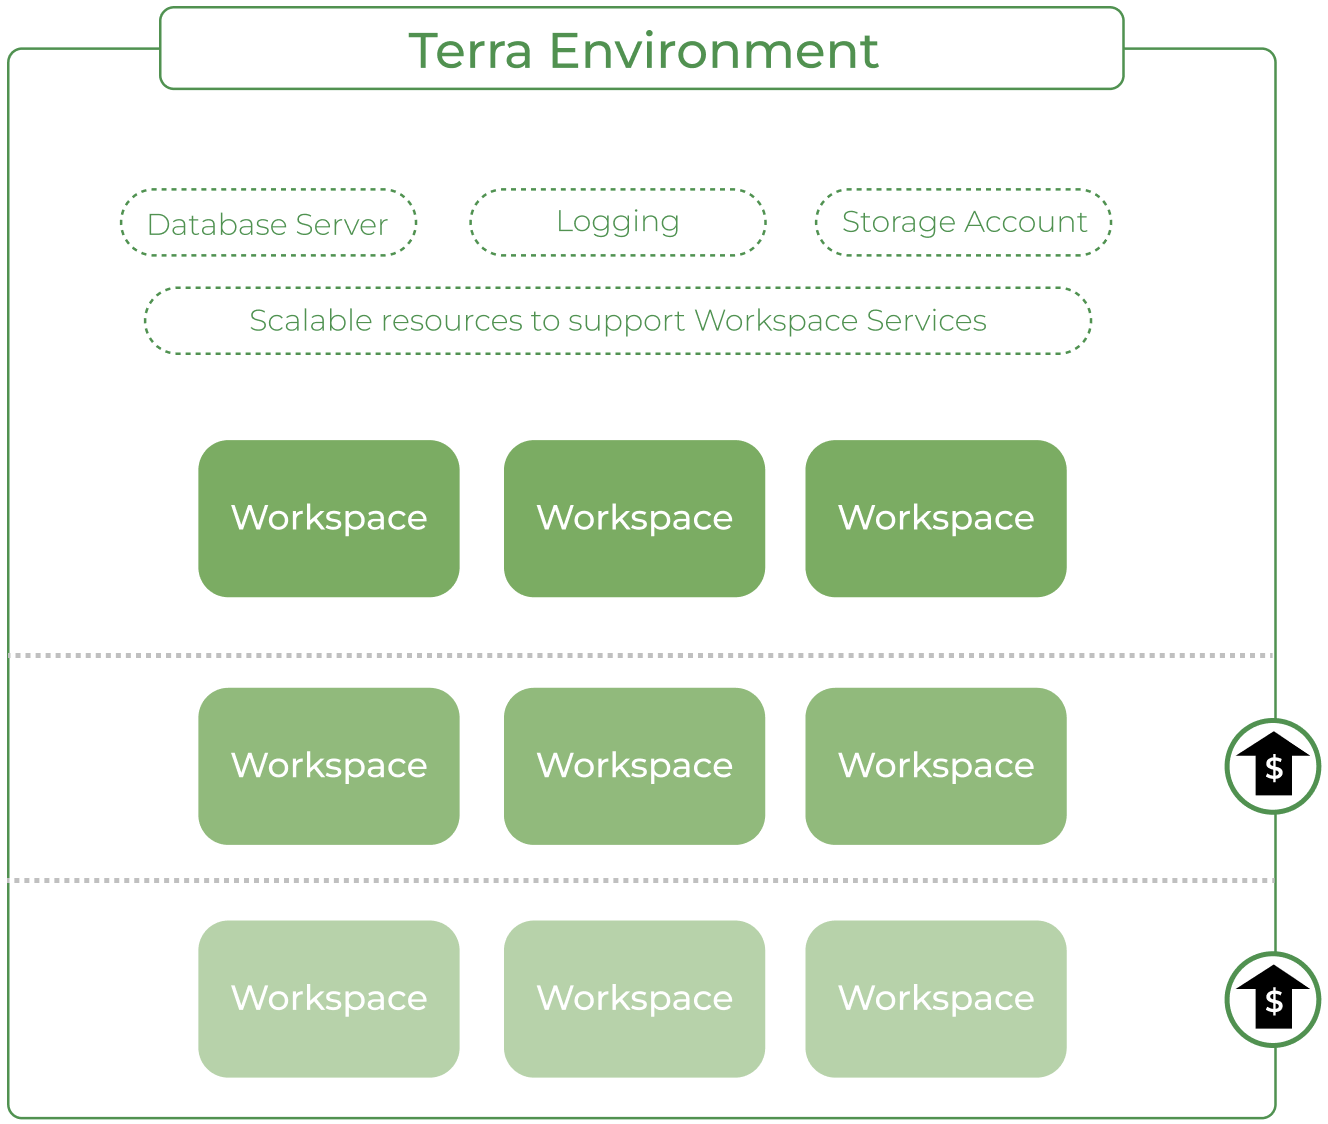 ToA_Terra-environment-cost-scaling_Diagram.png